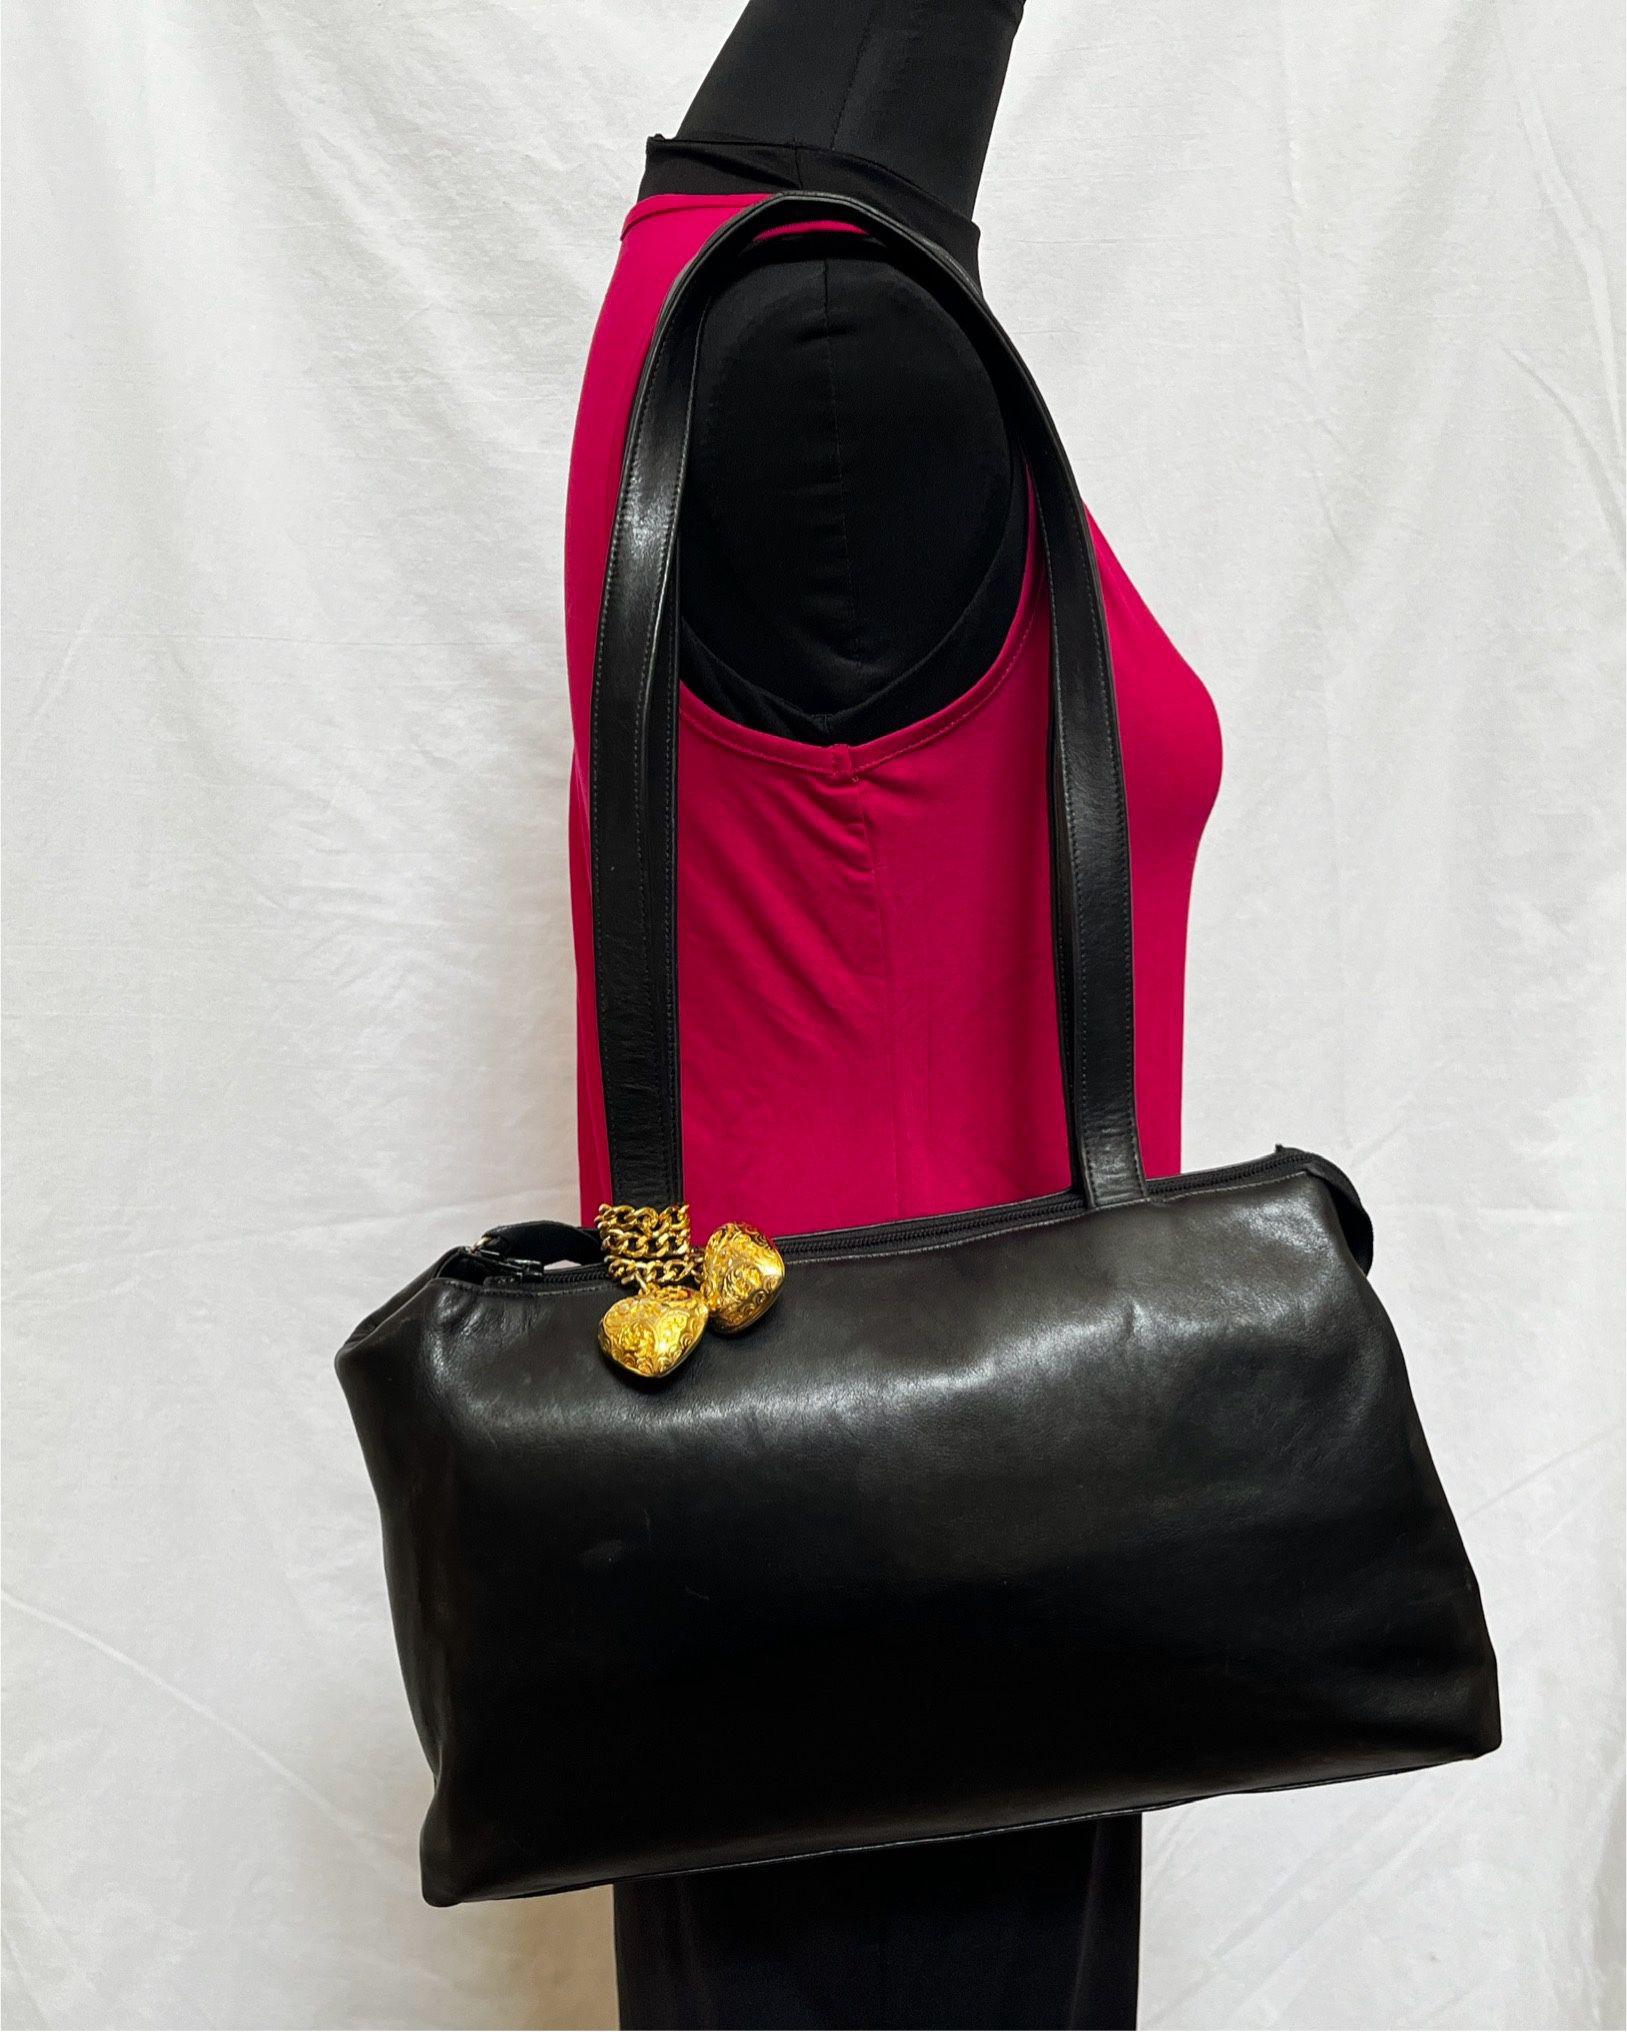 Large Heart Bag Charms On Black Leather Shoulder Bag By Carey Adina